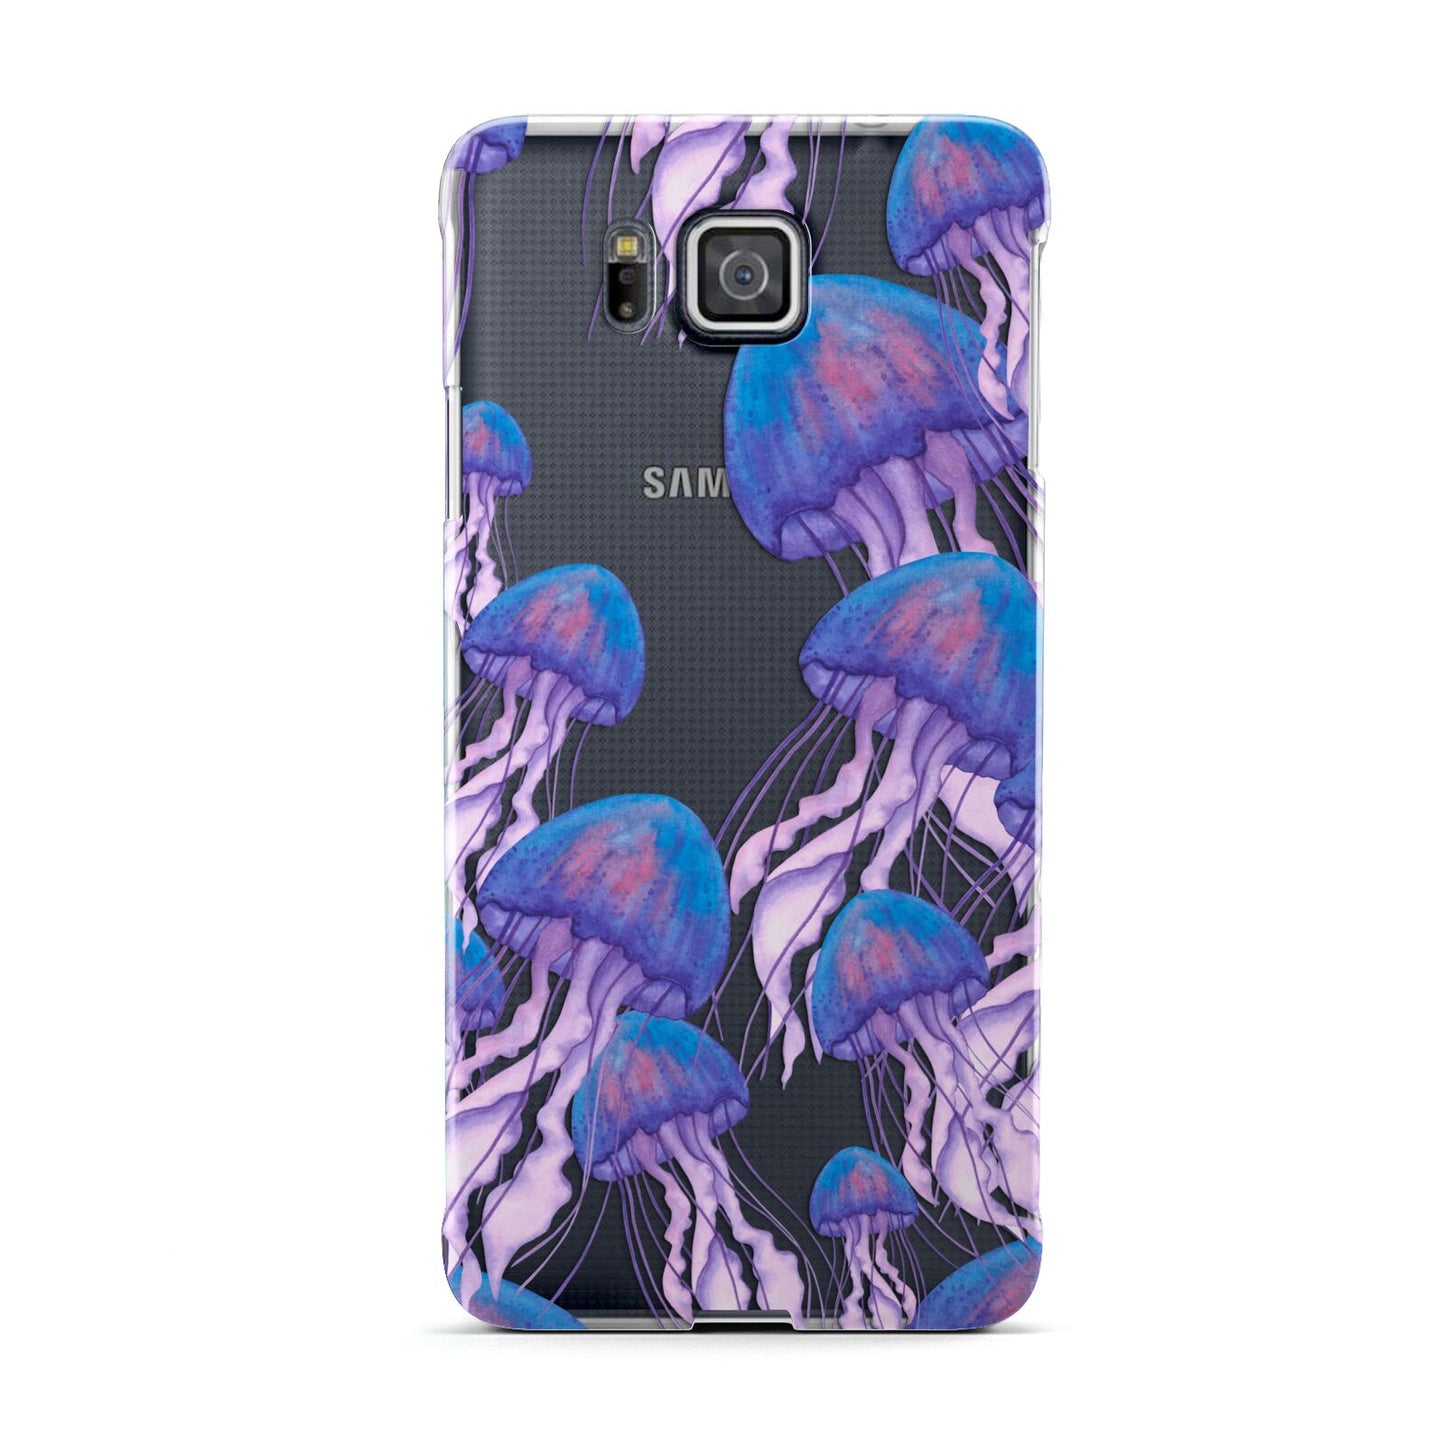 Jellyfish Samsung Galaxy Alpha Case